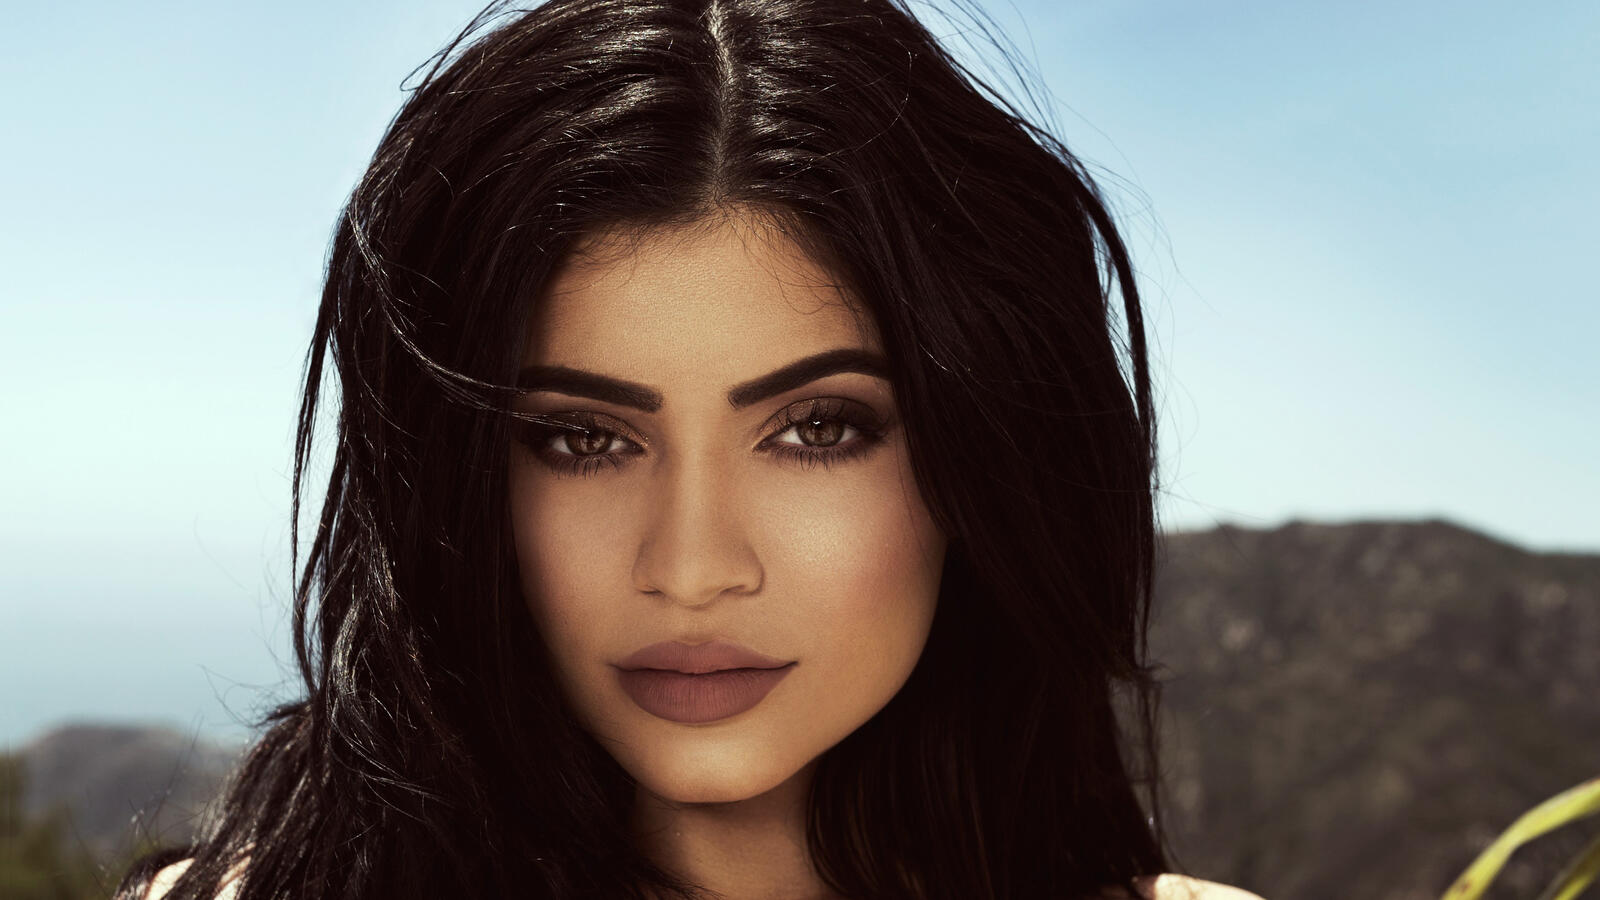 Wallpapers photoshoot model Kylie Jenner on the desktop